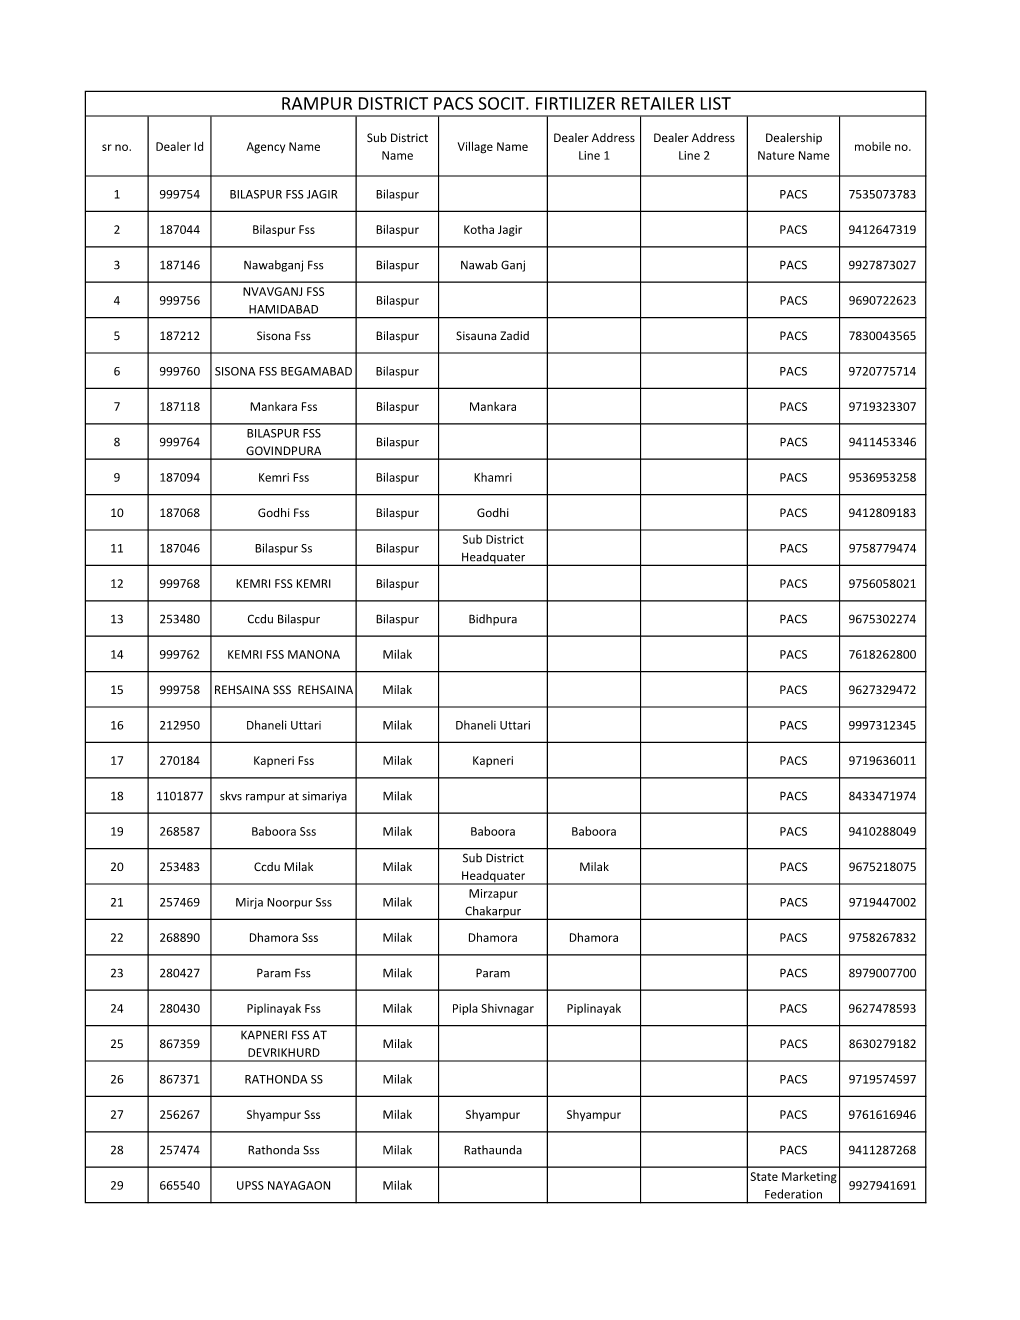 Rampur District Pacs Socit. Firtilizer Retailer List